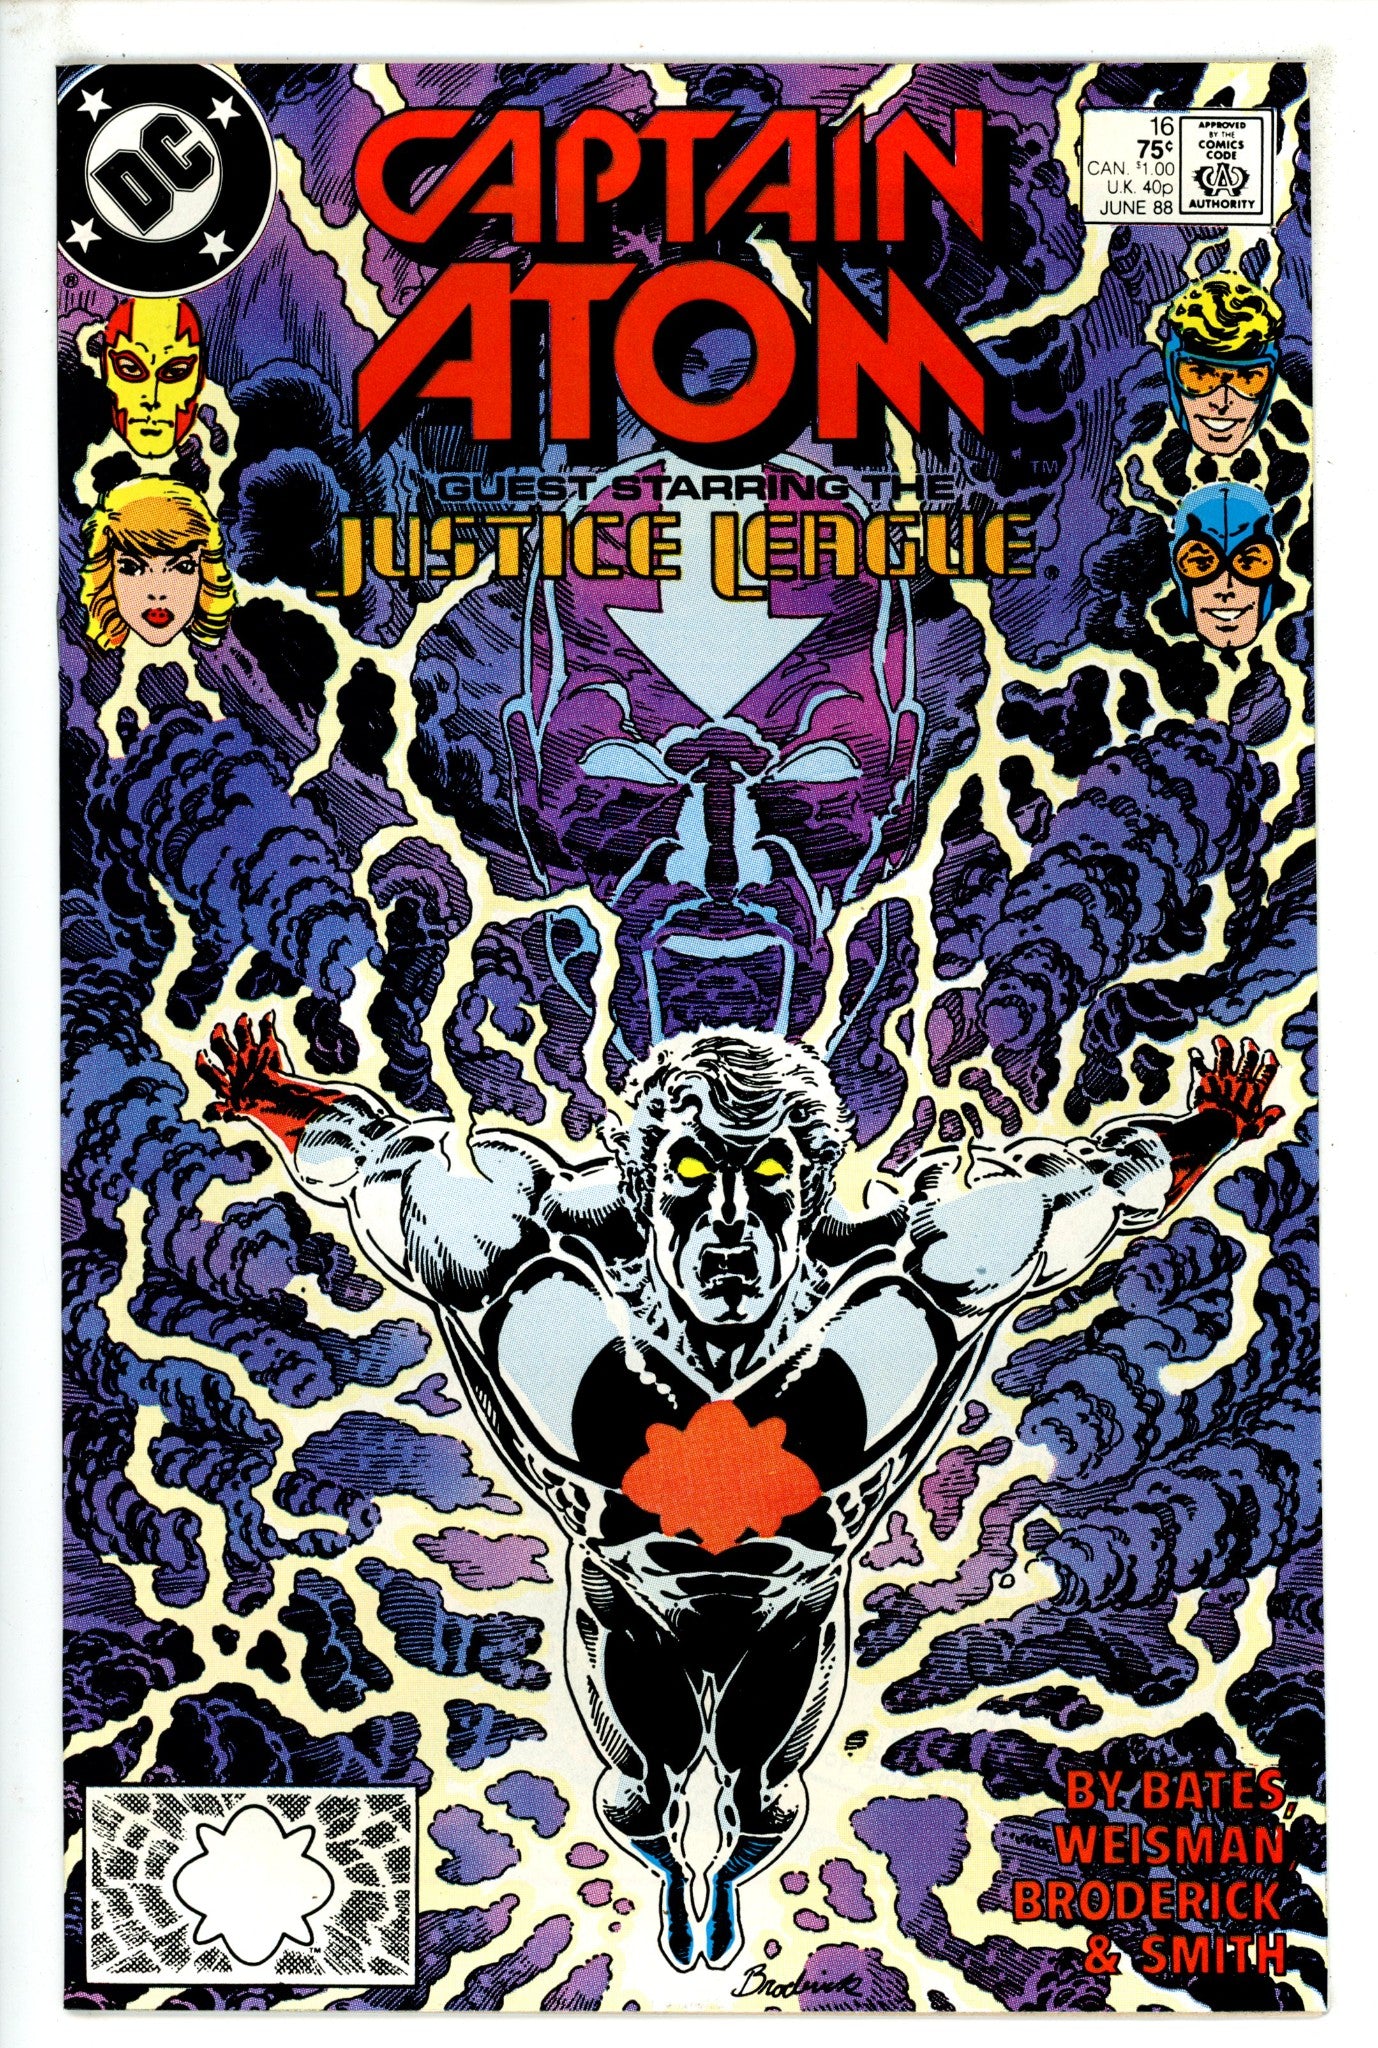 Captain Atom Vol 3 16 (1988)